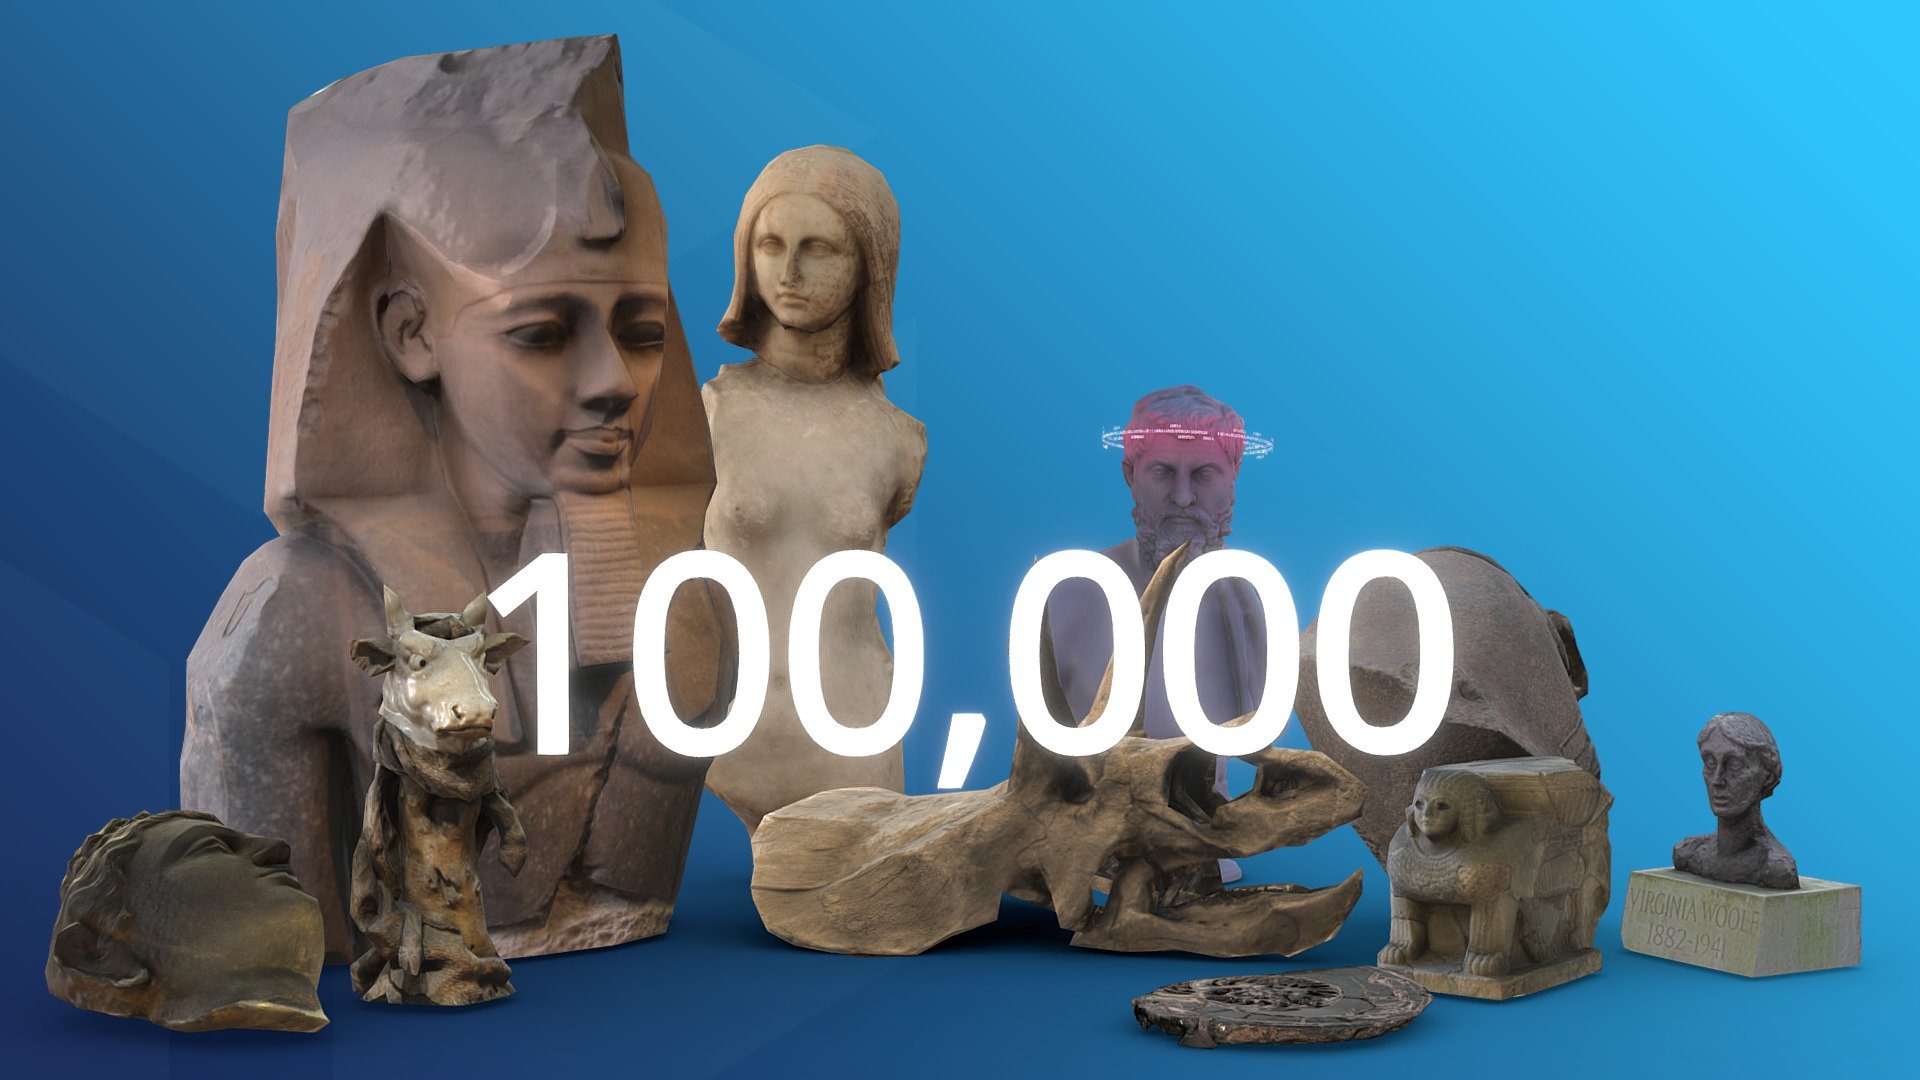 Over 100,000 Cultural Heritage & History Models!